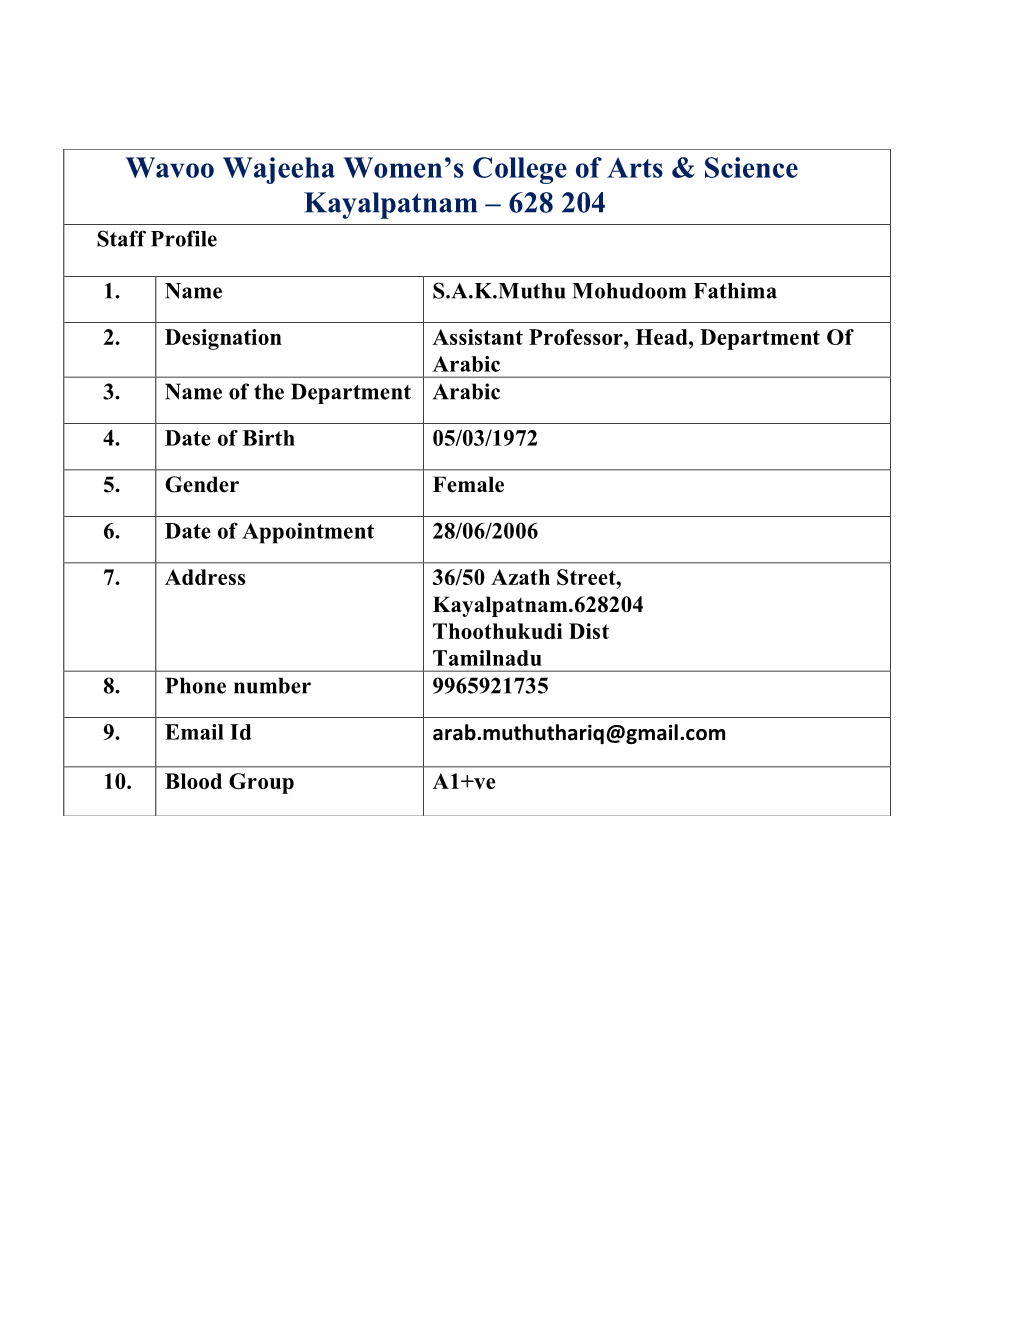 Wavoo Wajeeha Women's College of Arts & Science Kayalpatnam – 628